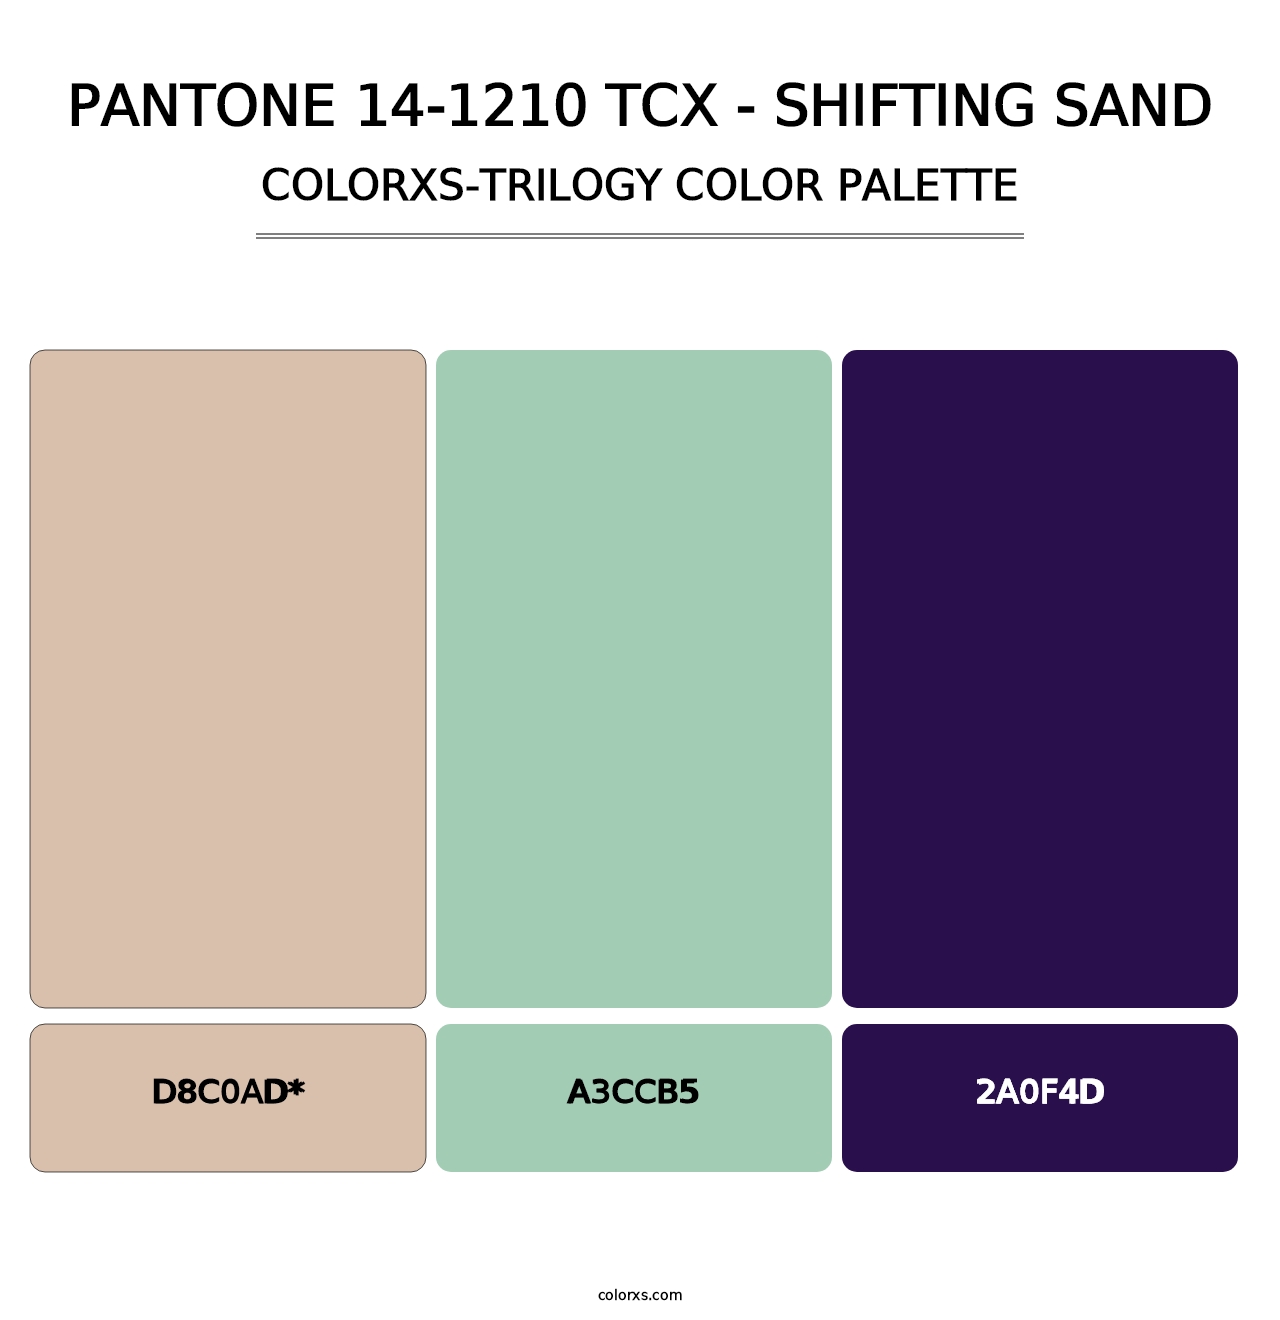 PANTONE 14-1210 TCX - Shifting Sand - Colorxs Trilogy Palette